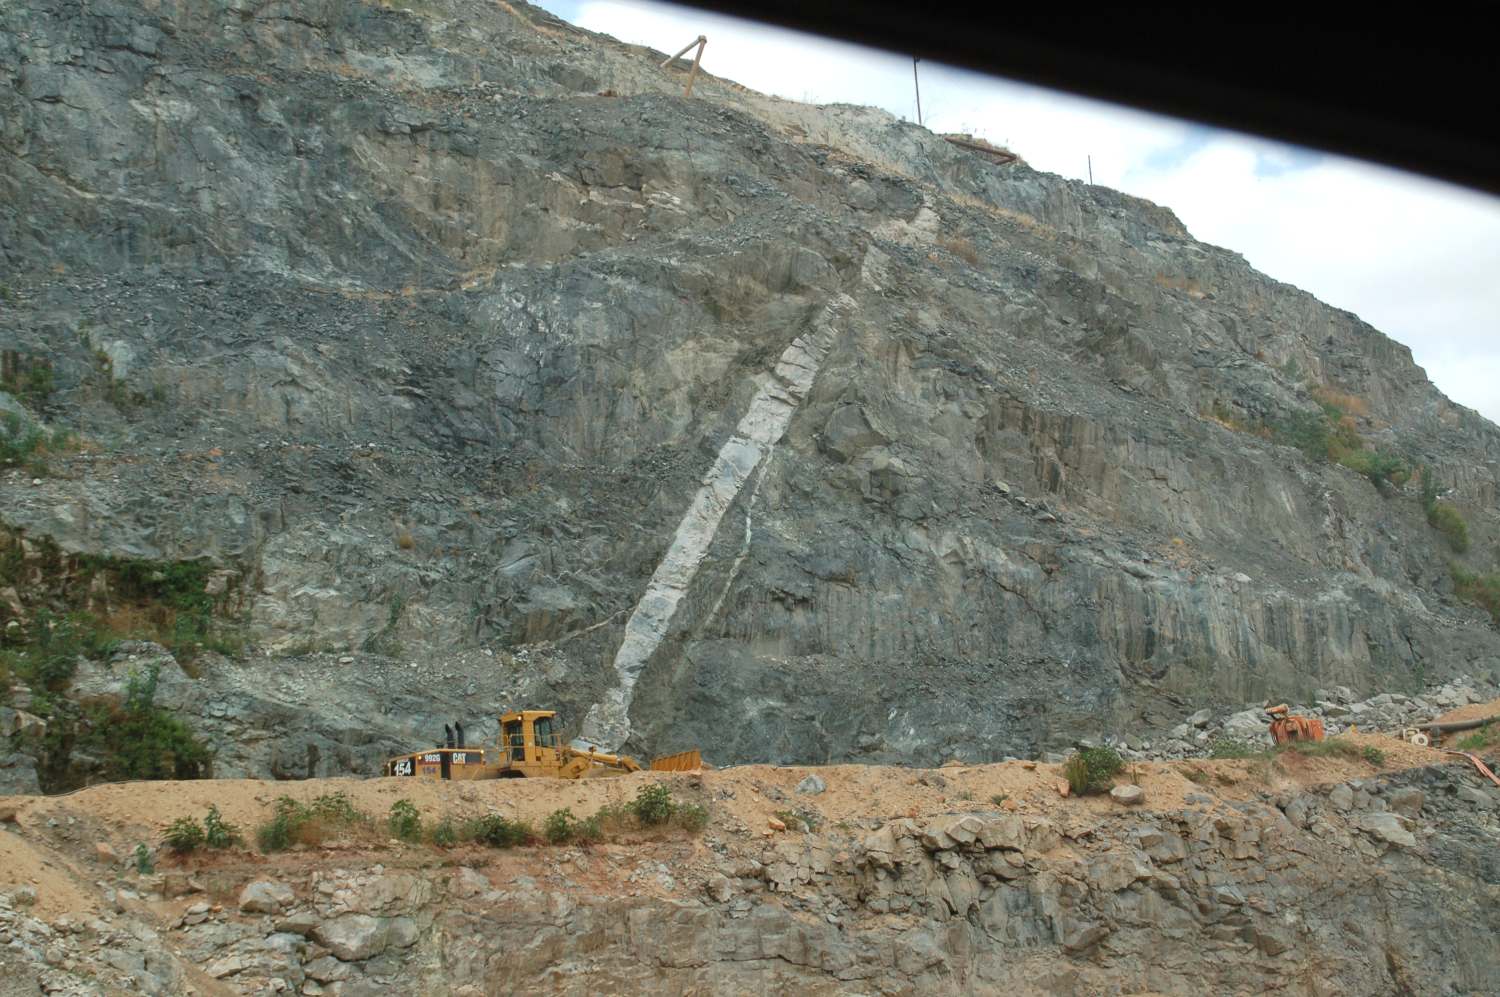 Norite Norite du complexe magmatique du Bushveld Bushveld Bushveld, Base zone principale Mokopane (Potgietersrus) PPRust mine